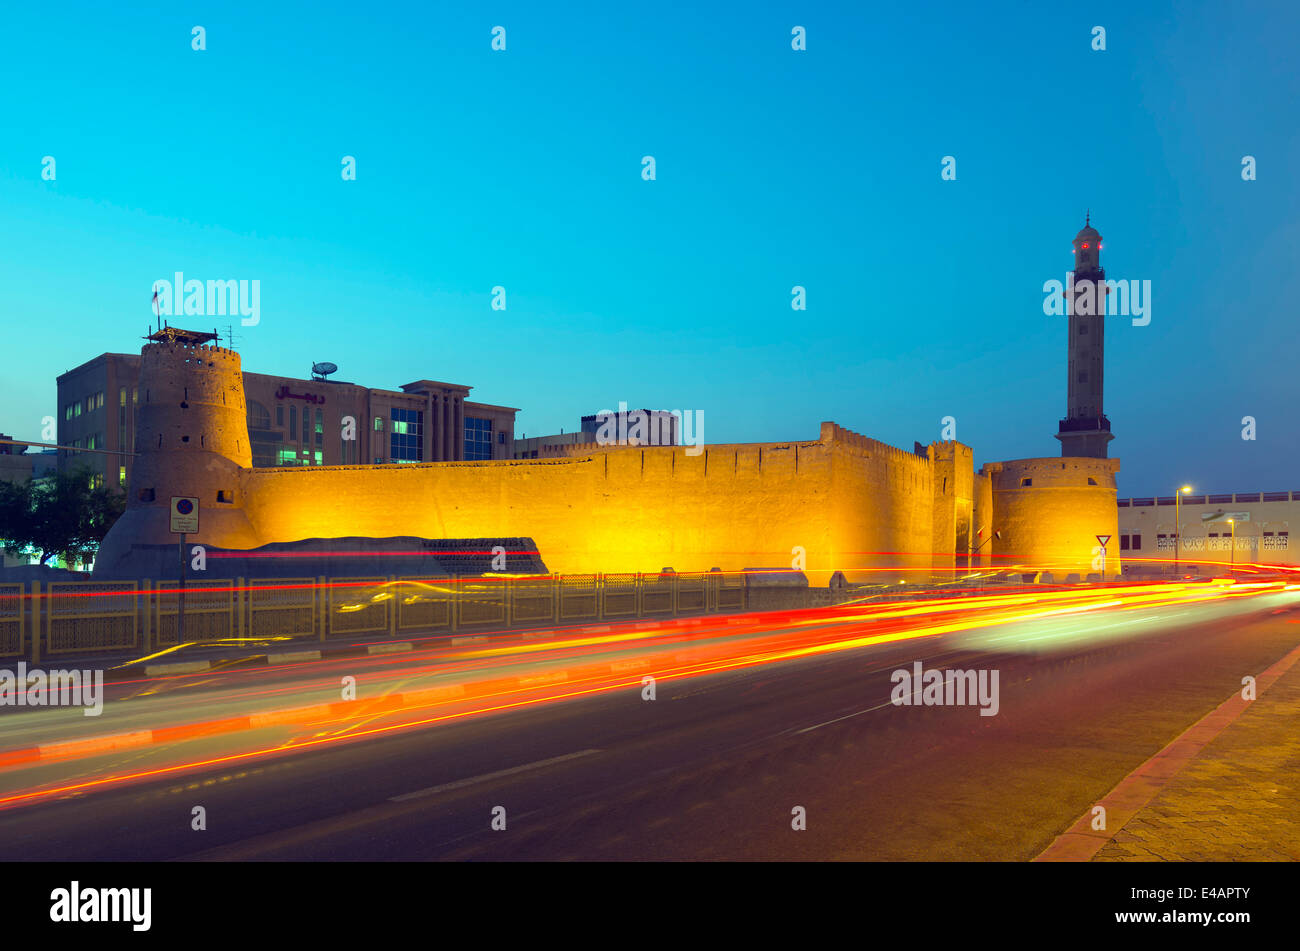 Middle East, United Arab Emirates, Dubai, Dubai museum and minaret (oldest building in Dubai) Stock Photo